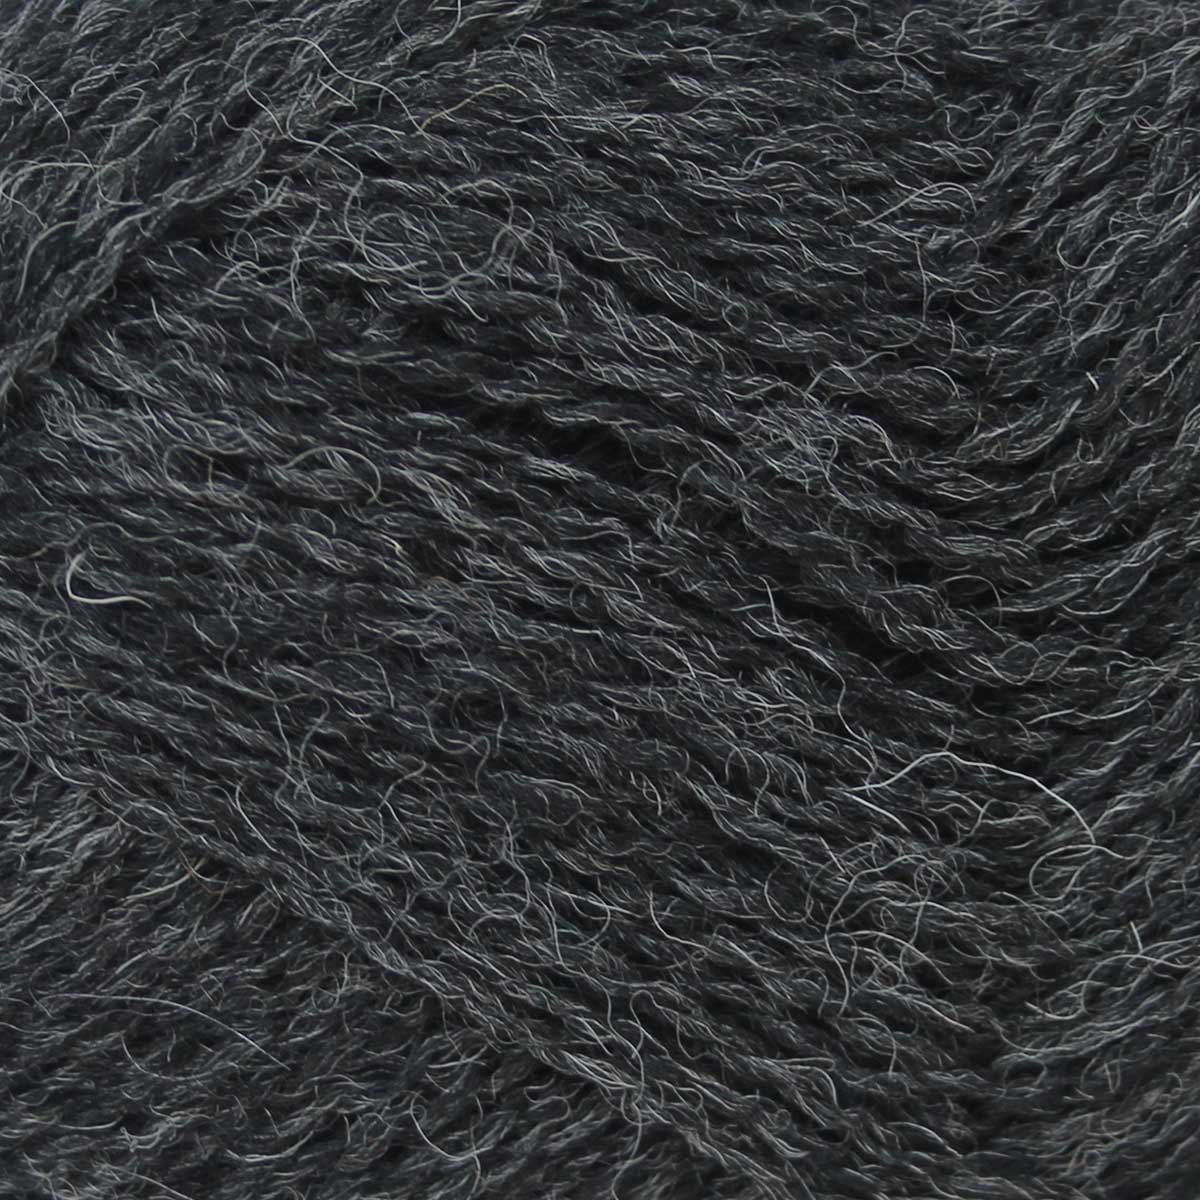 Pip Colourwork 4ply: 100% British Wool